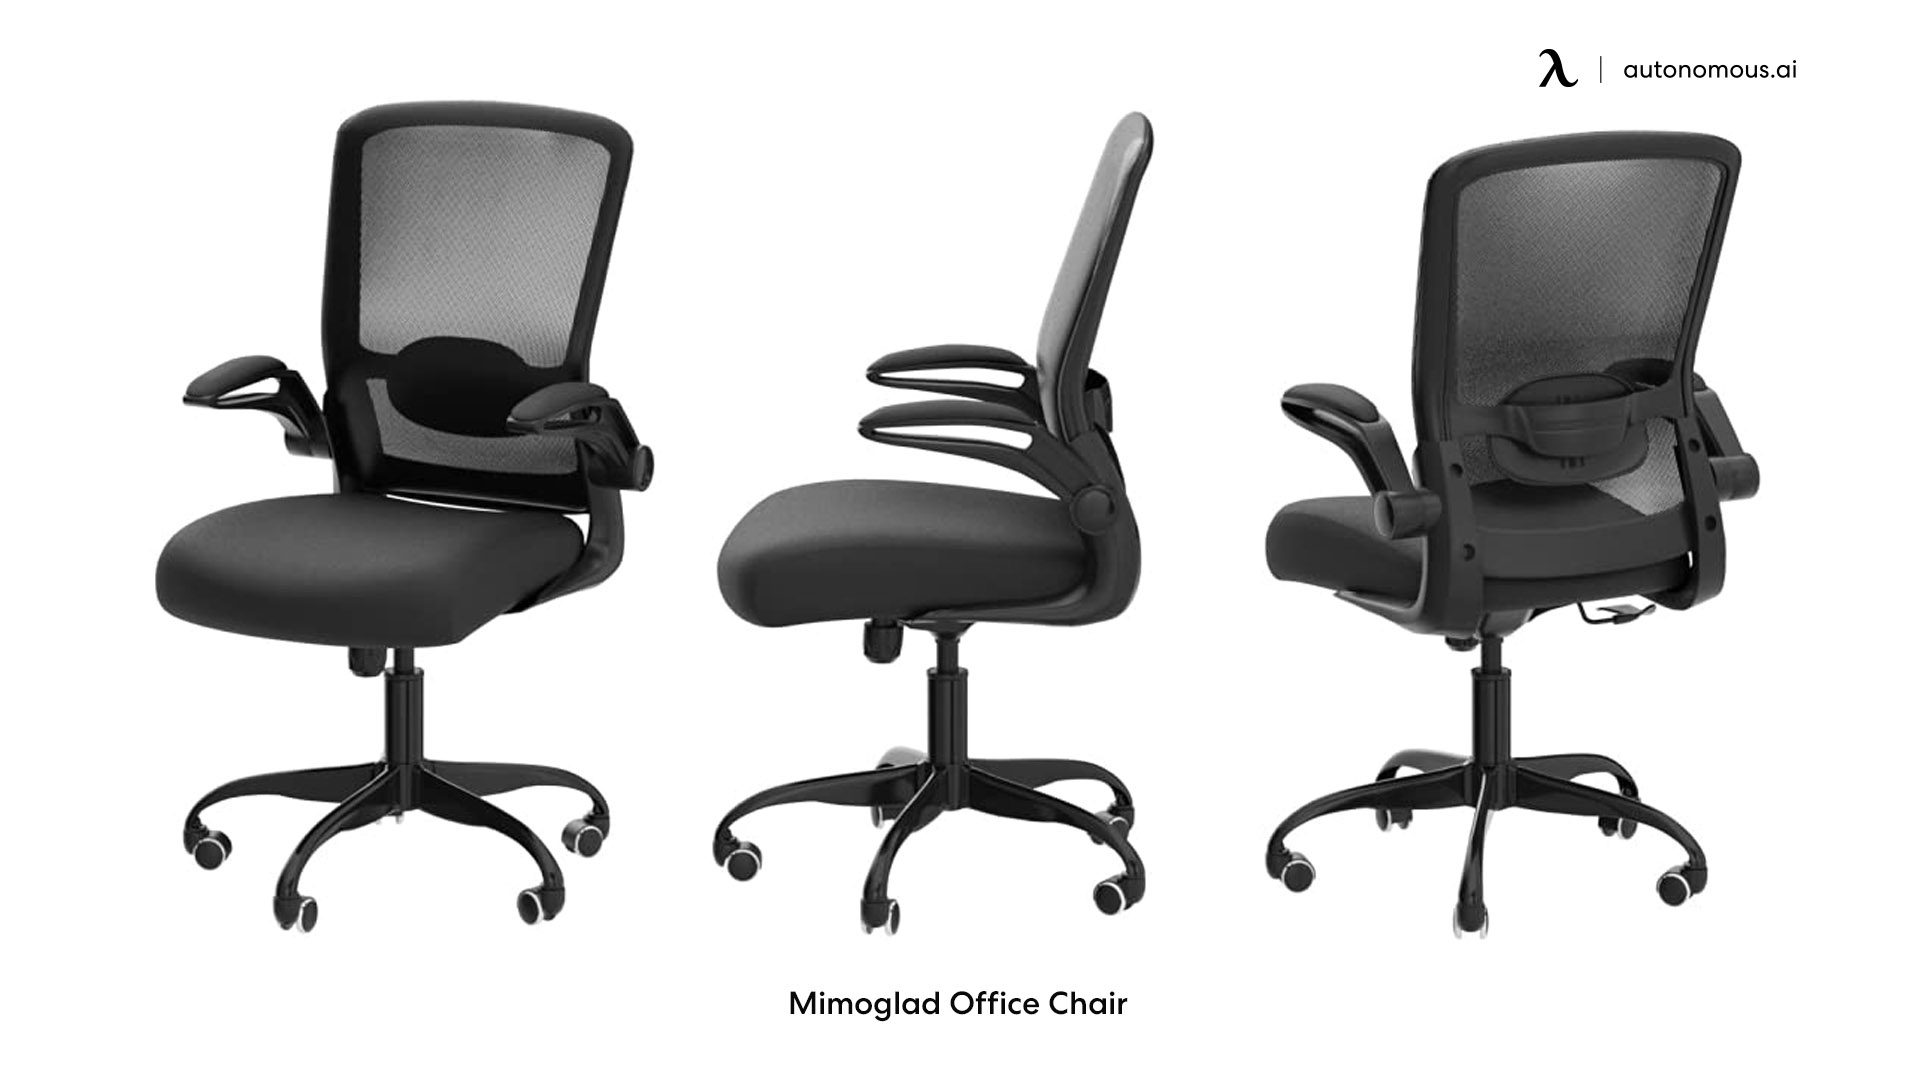 Mimoglad low profile desk chair